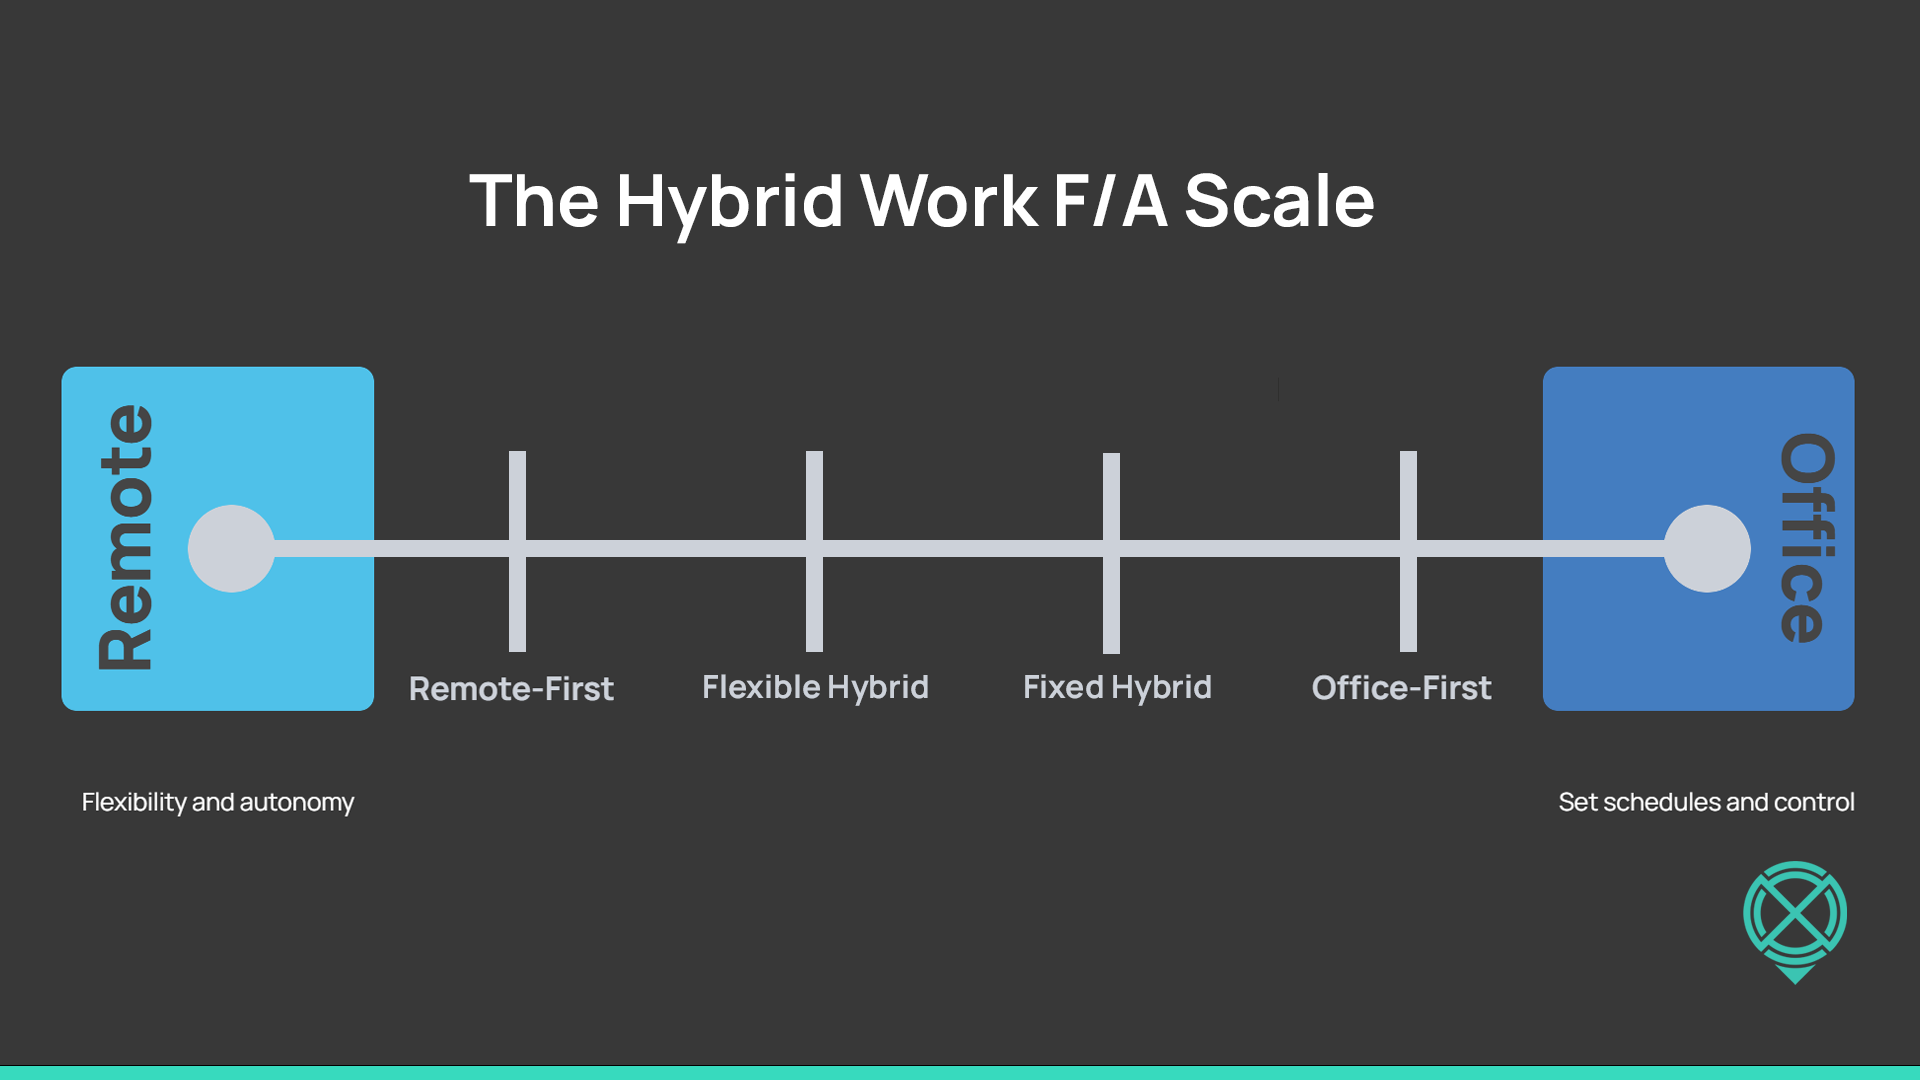 Hybrid work F/A scale for hybrid working models